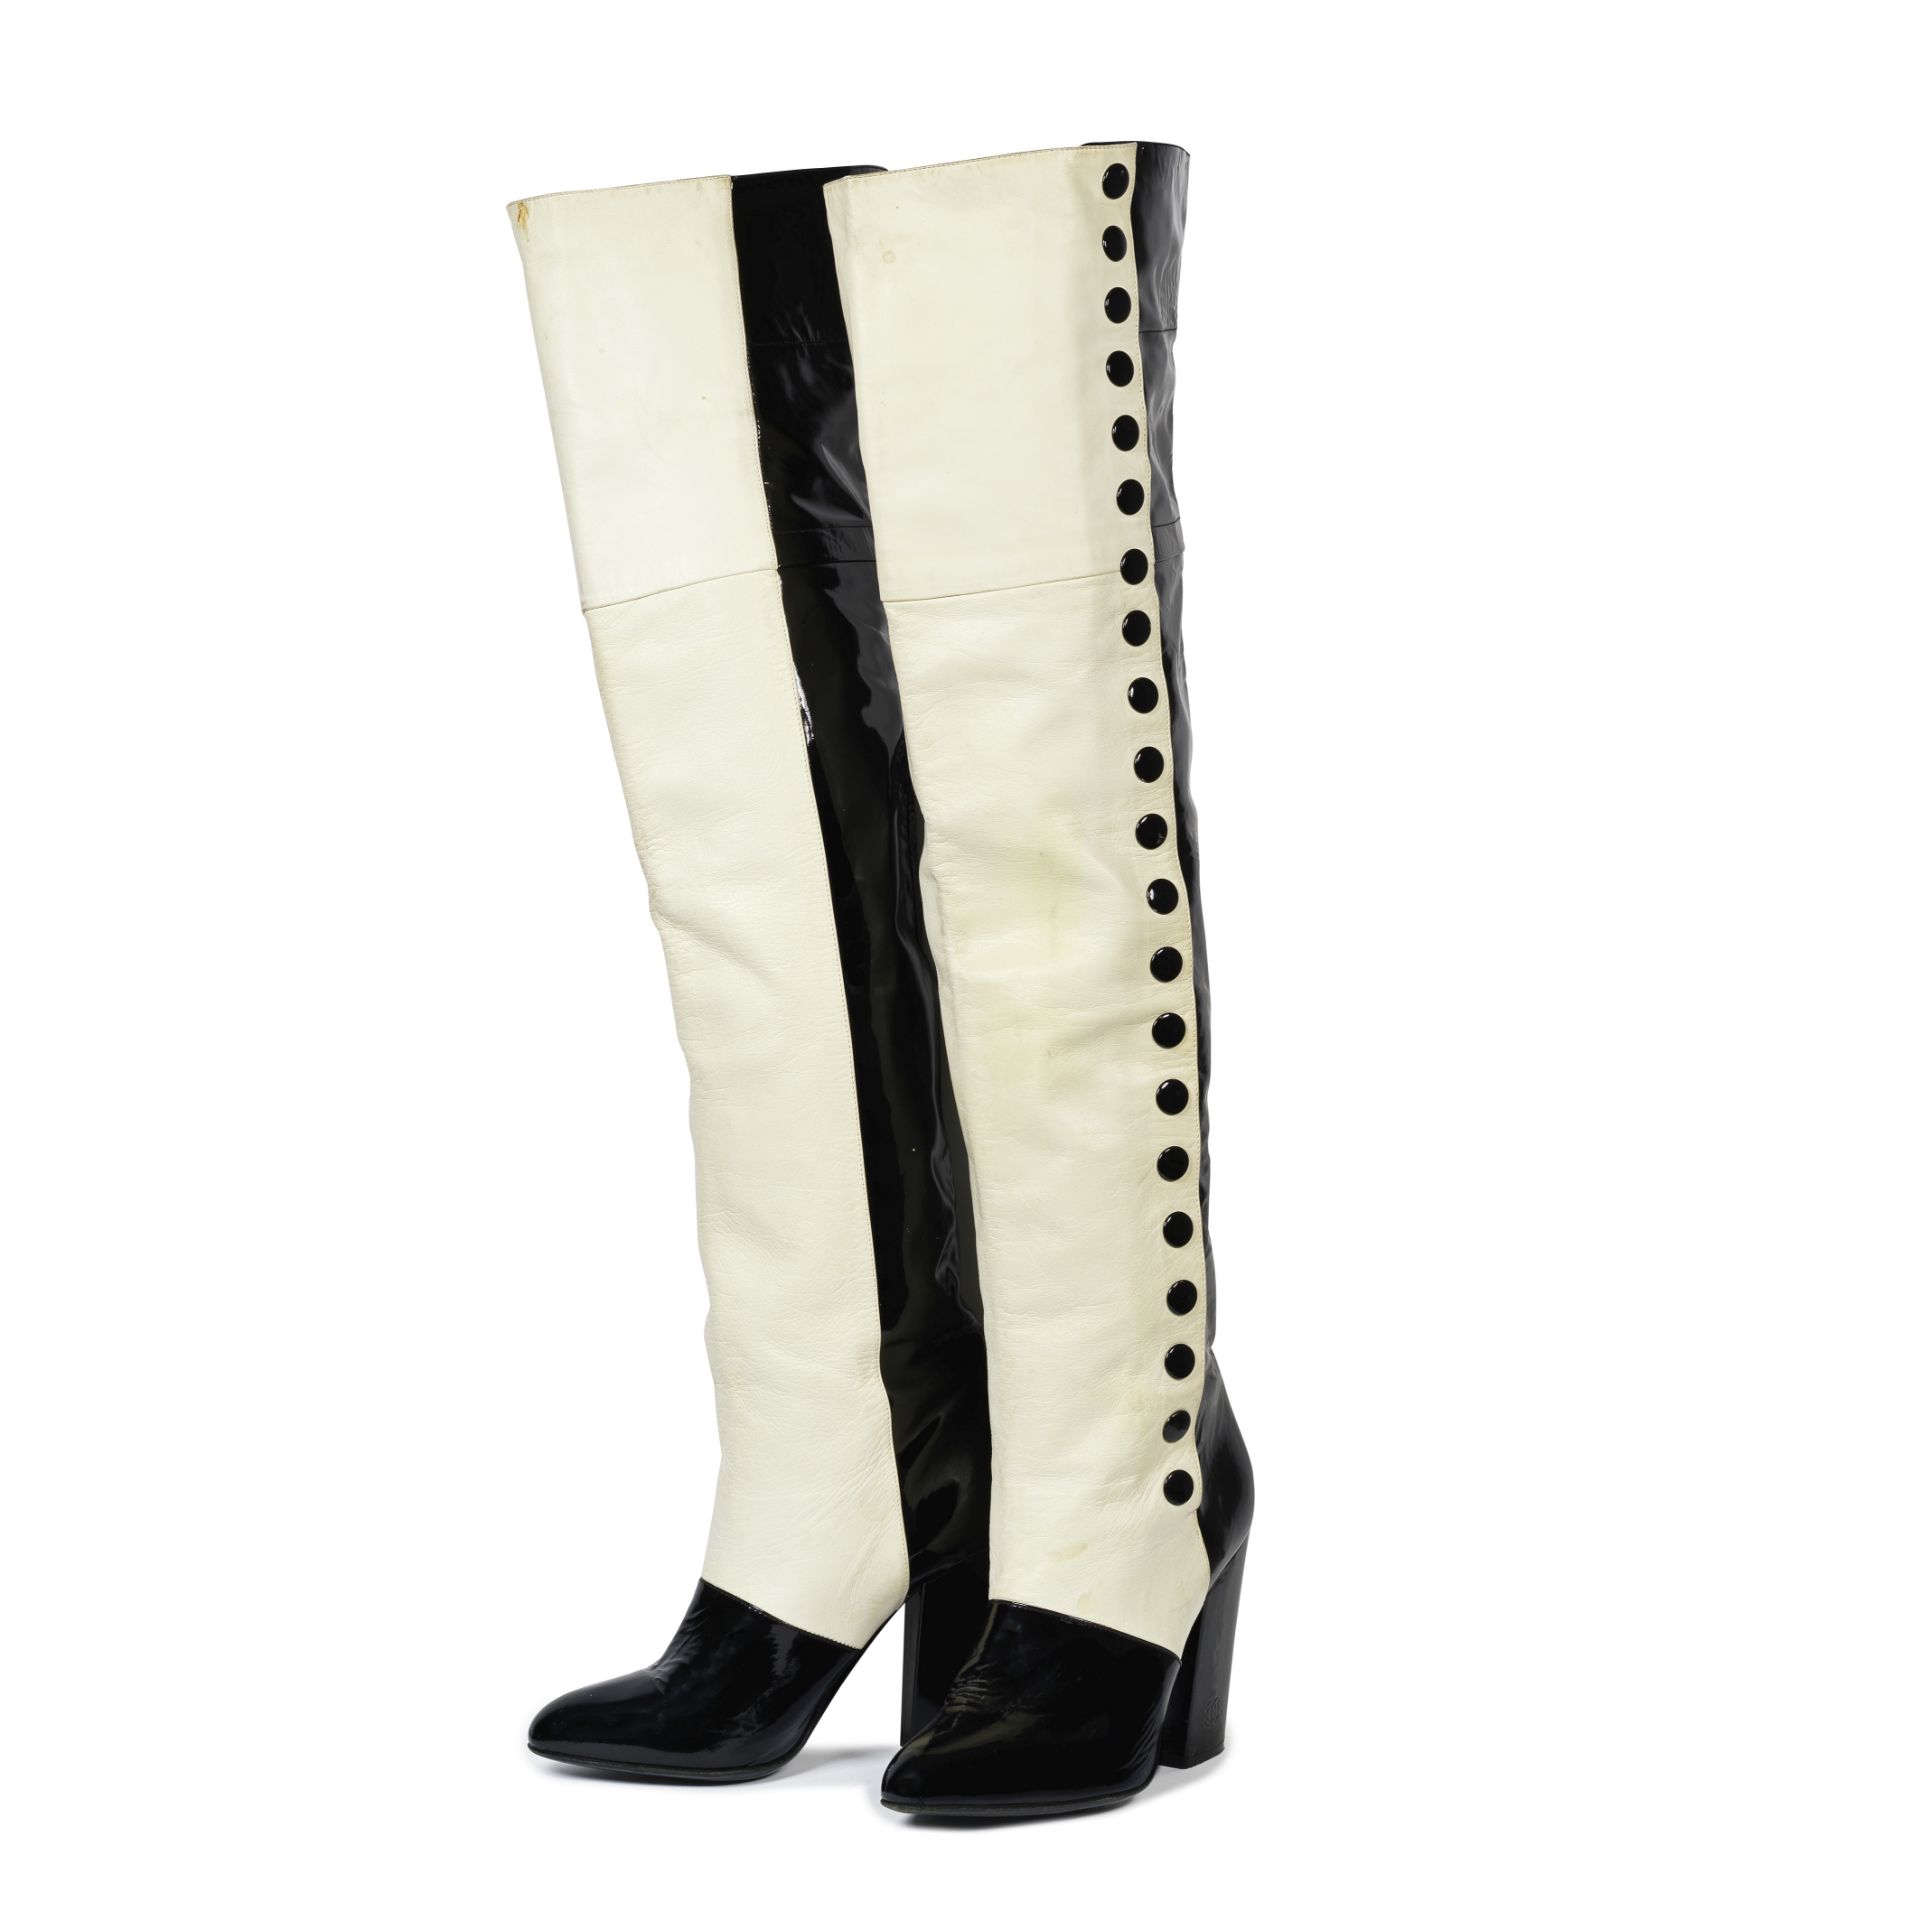 Shingai Shoniwa / Chanel A Pair of Black and White Thigh High Boots, 1990s